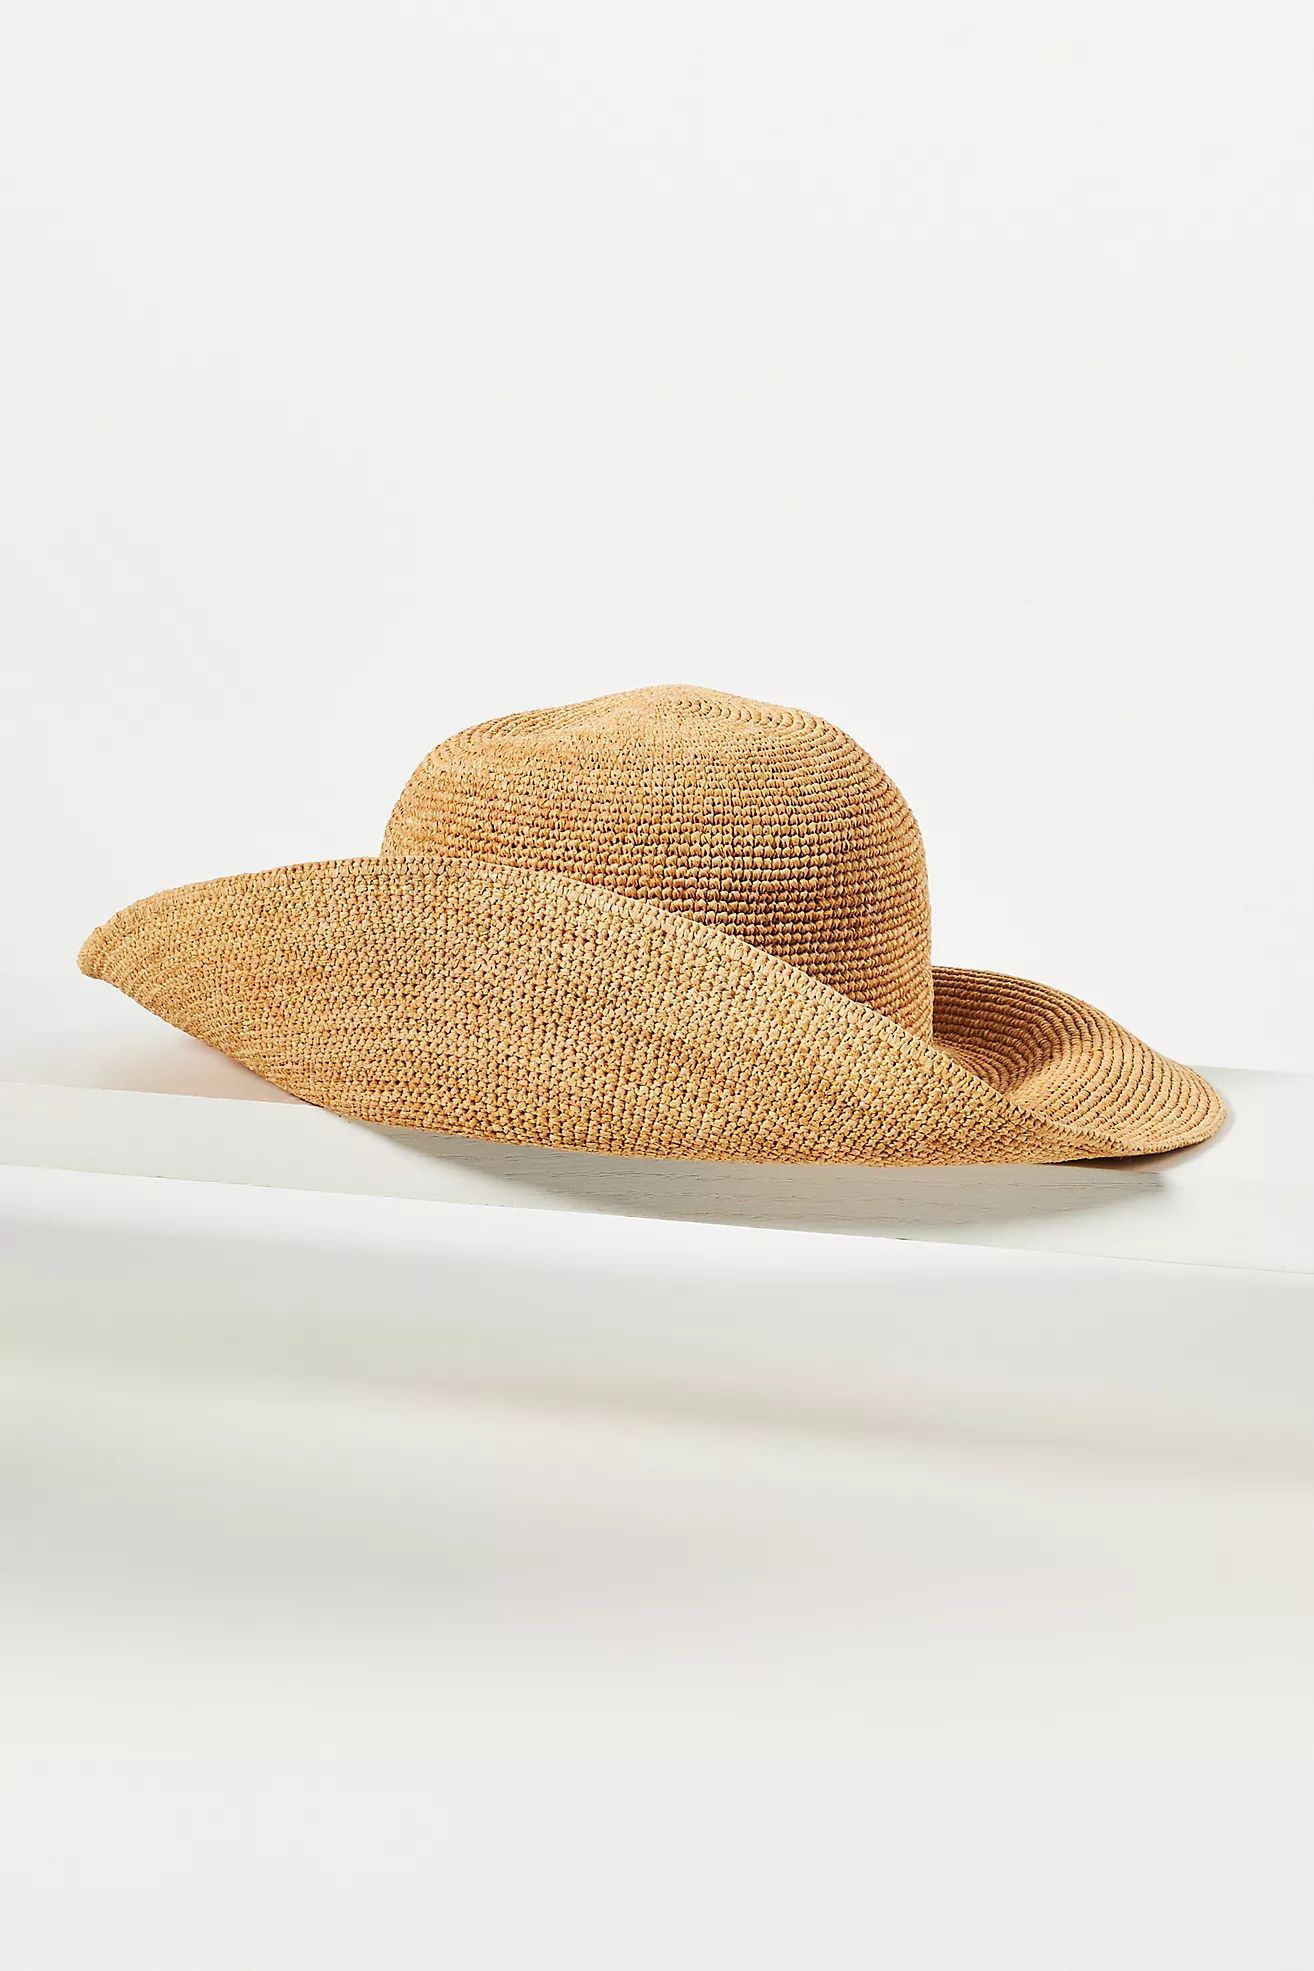 Casa Clara Marieke Bucket Hat | Anthropologie (US)